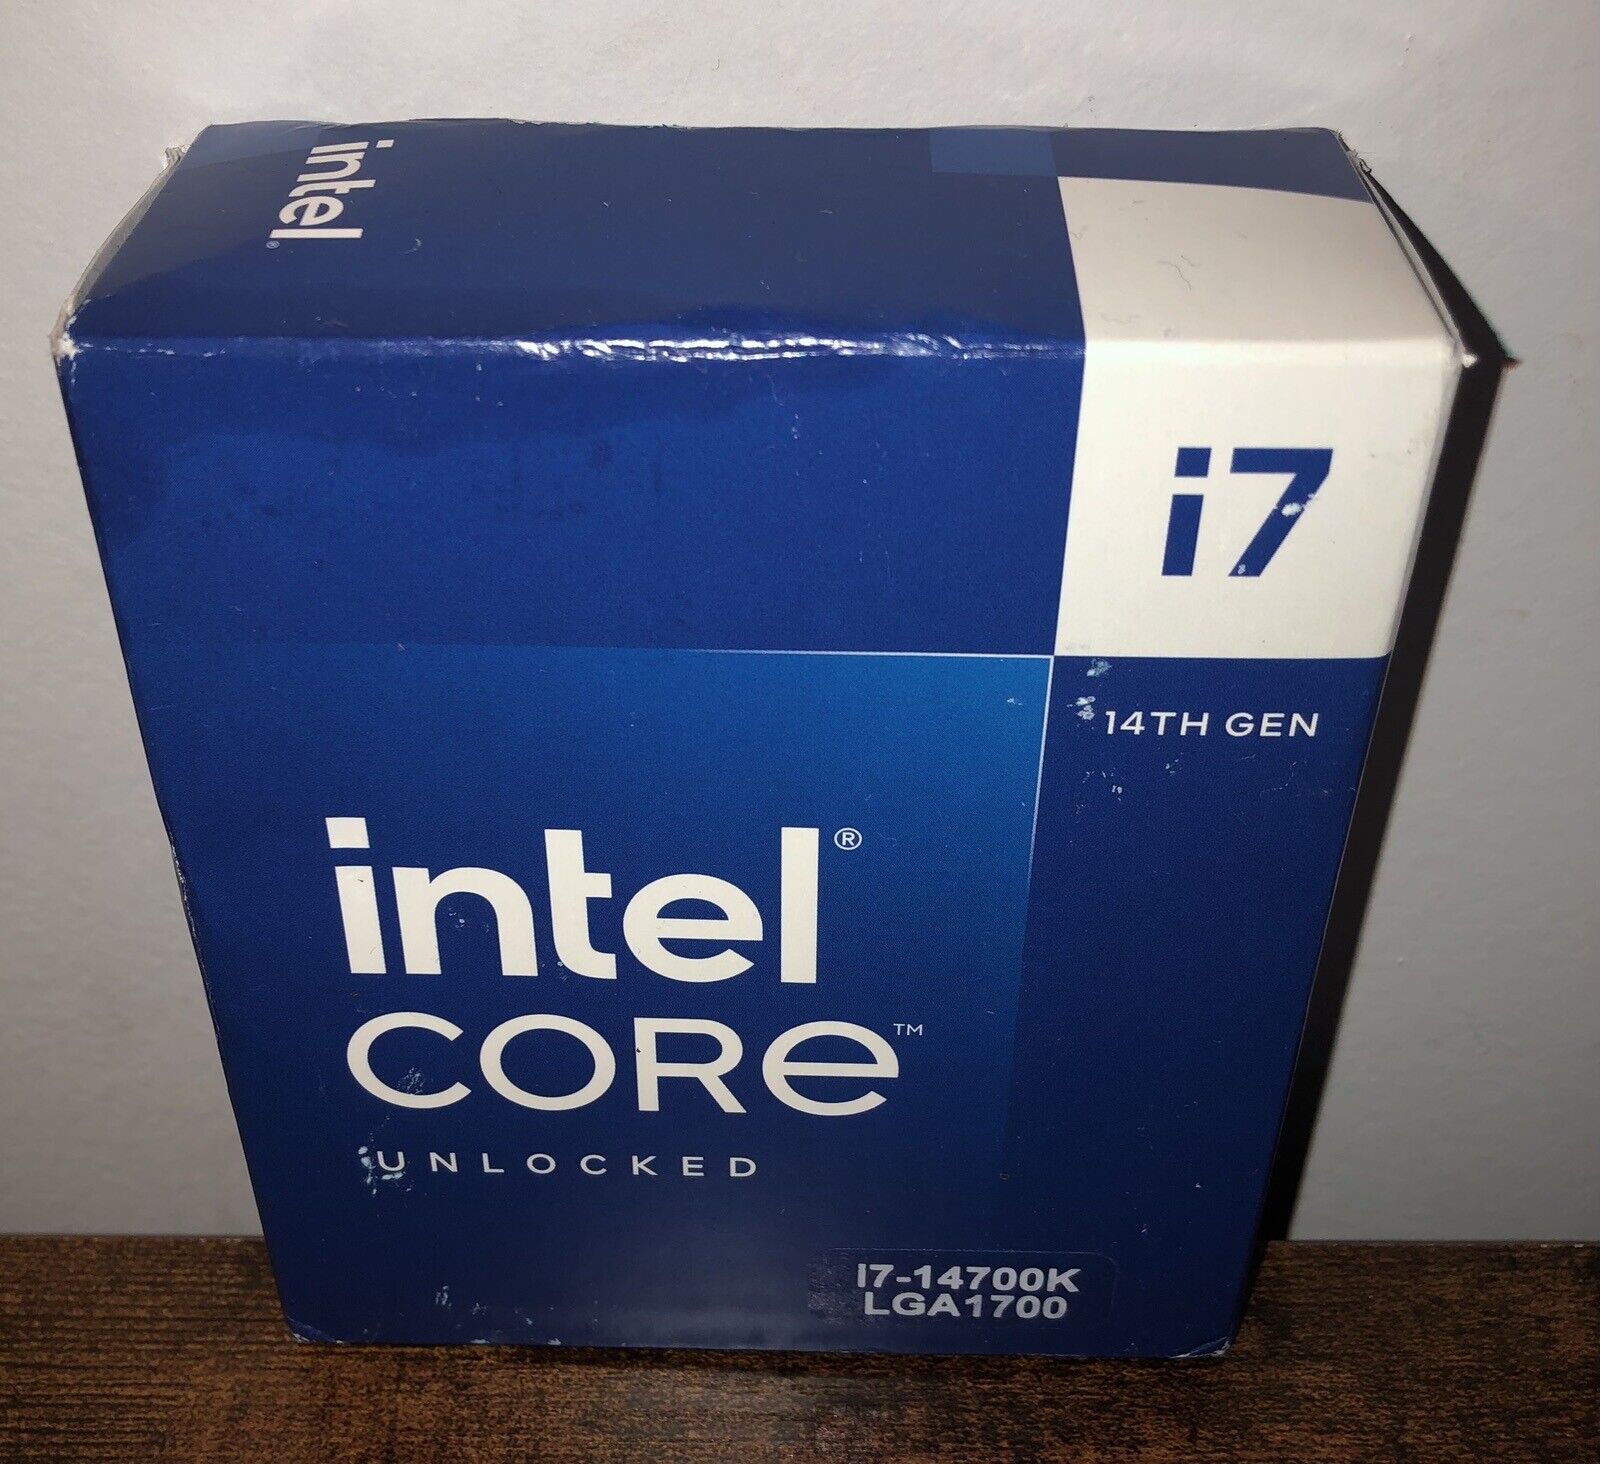 Sealed Intel Core i7-14700K Desktop Processor  Up to 5.6 GHz max Max Clock Speed